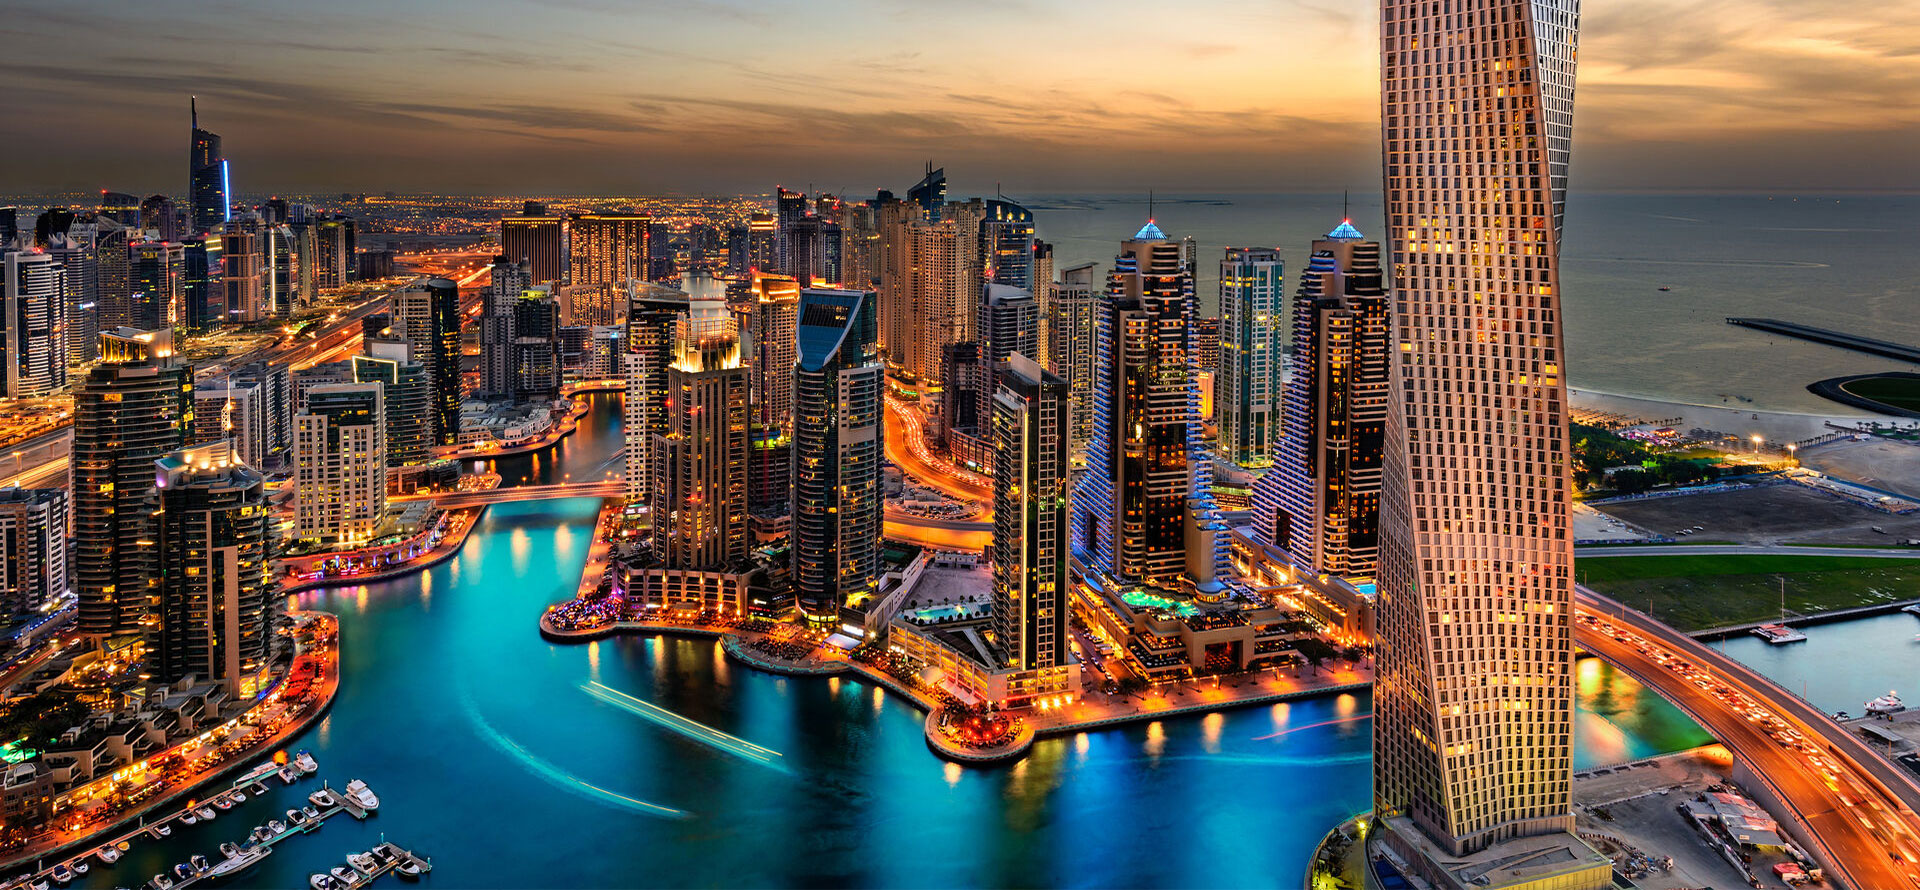 Dubai honeymoon resorts at night.